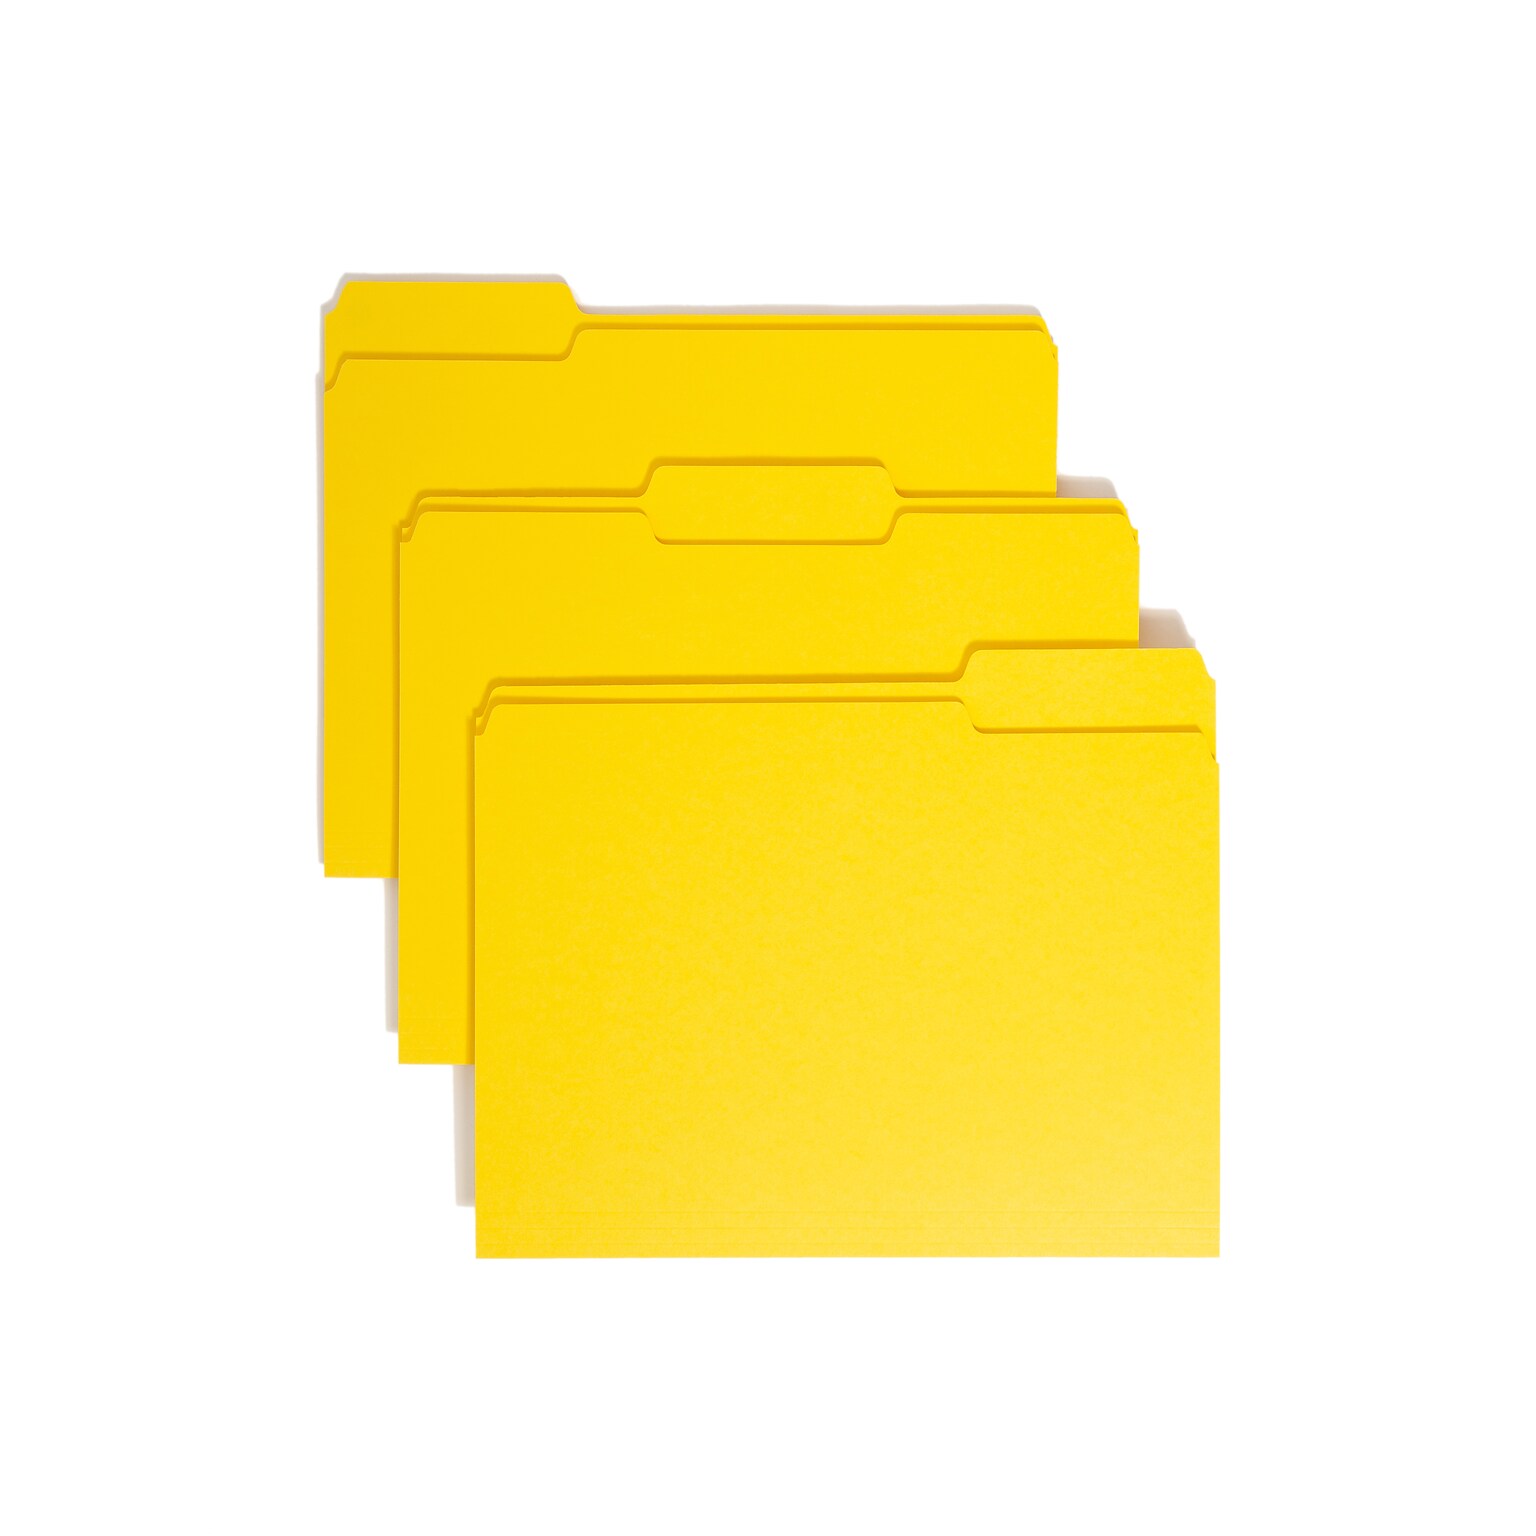 Smead File Folder, 1/3-Cut Tab, Letter Size, Yellow, 100/Box (12943)